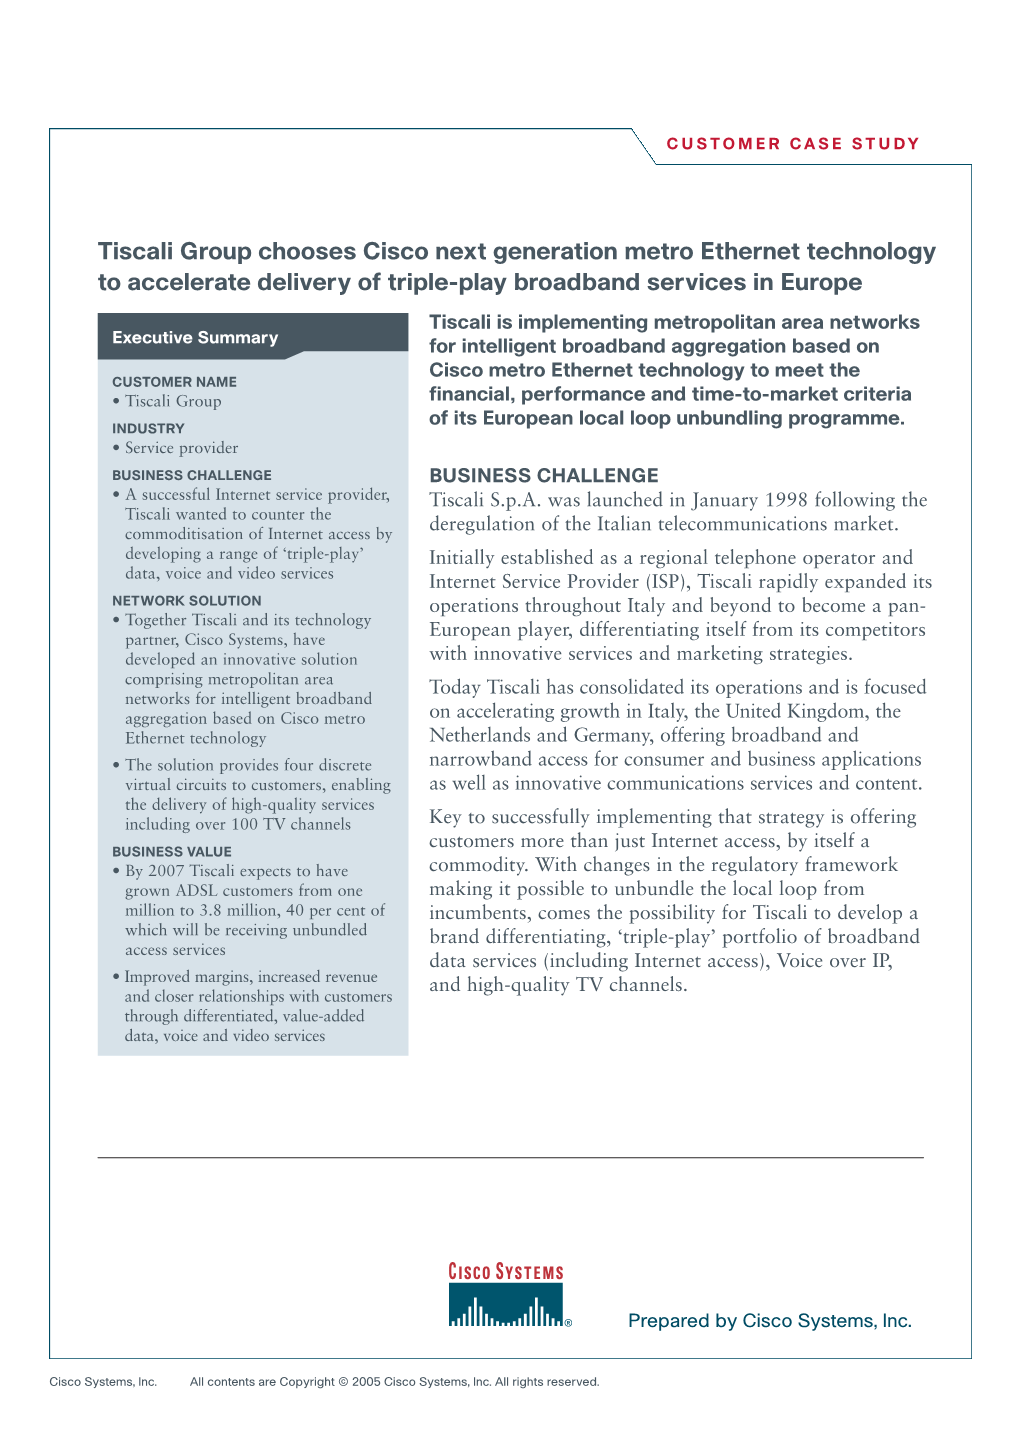 Tiscali Group Chooses Cisco Next Generation Metro Ethernet